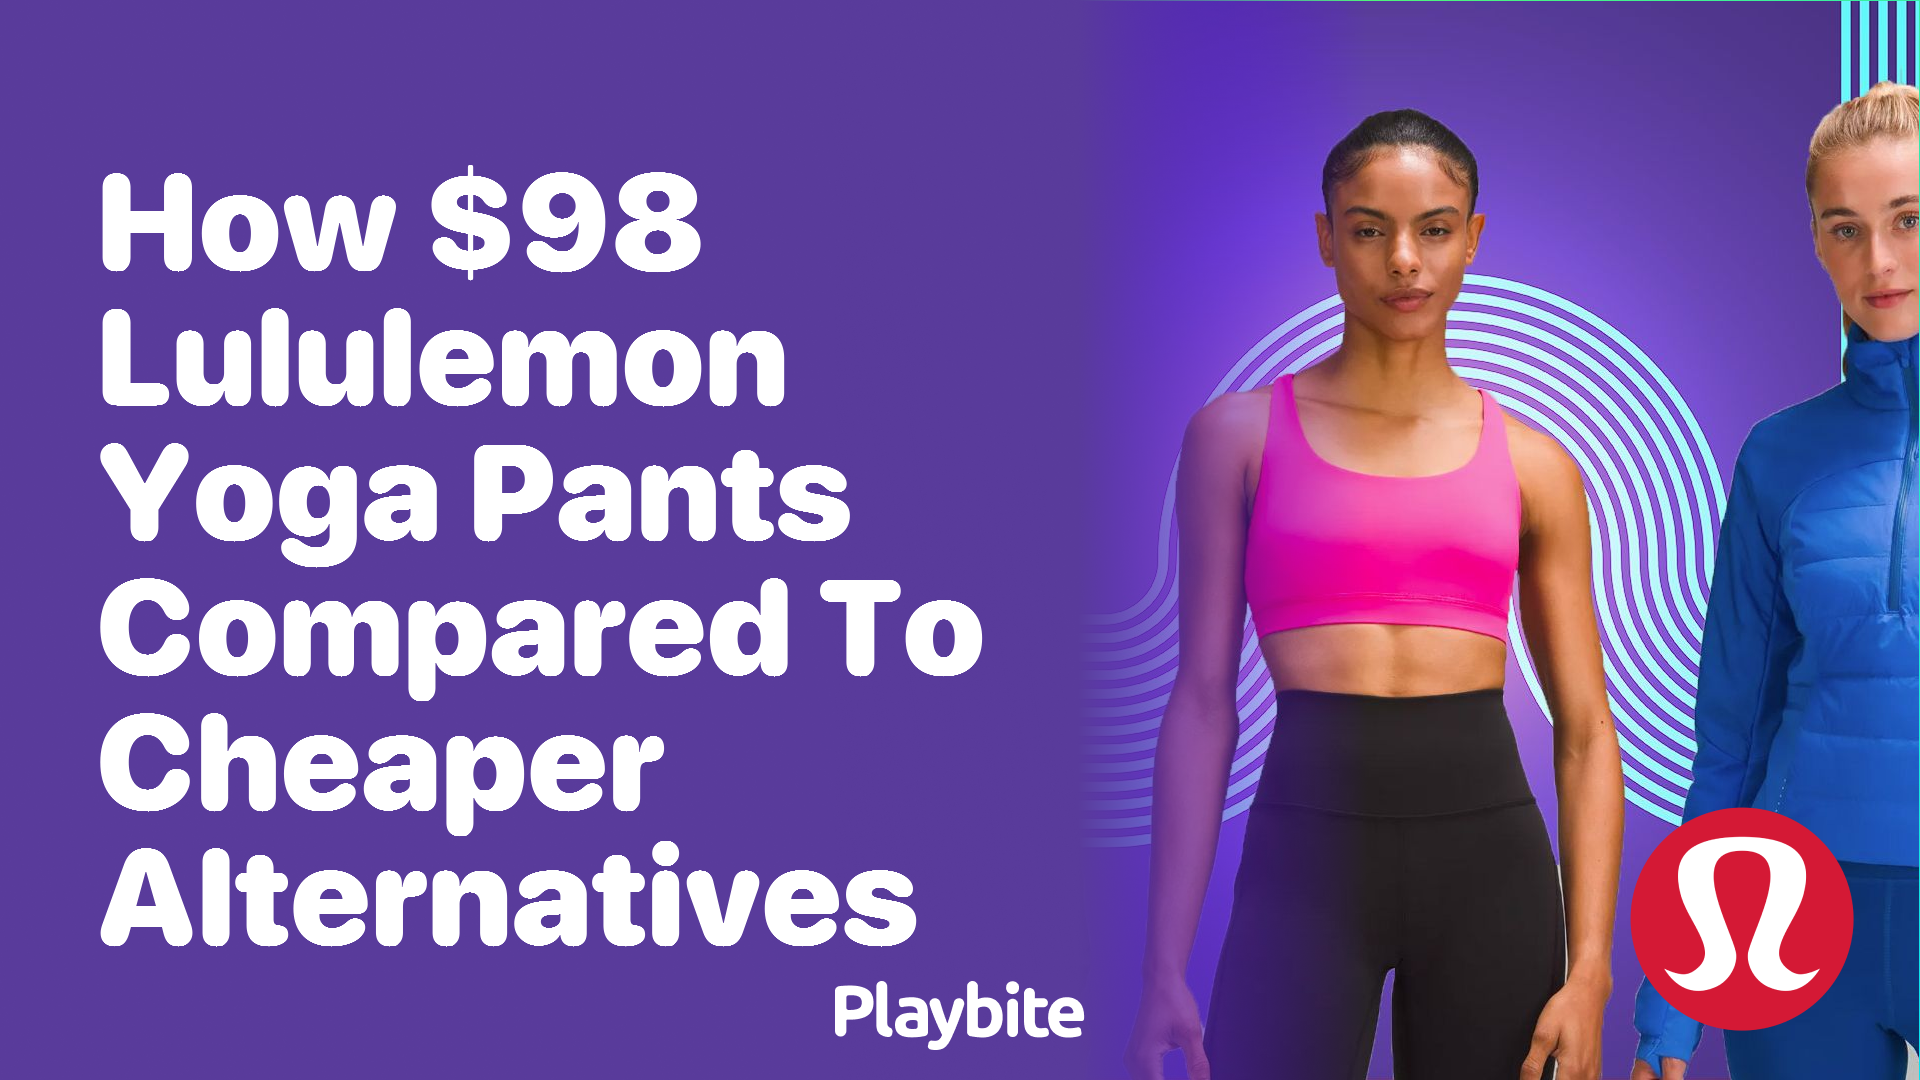 How Do $98 Lululemon Yoga Pants Compare to Cheaper Alternatives